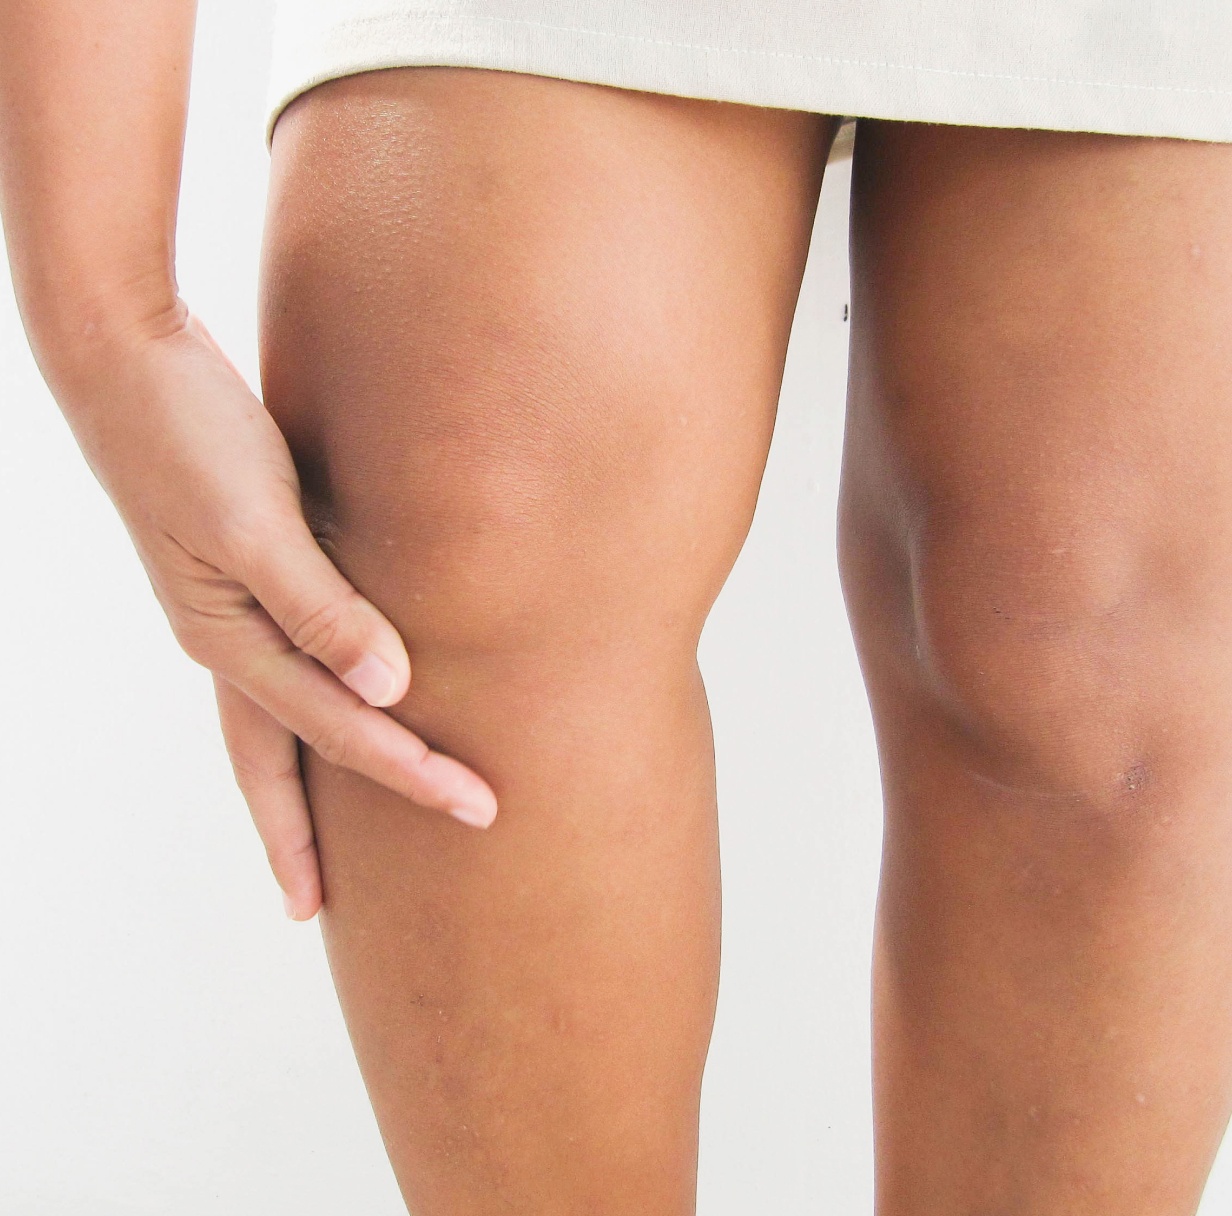 Maigrir sans chirurgie : cryolipolyse genoux | Paris 8 | Dr Ben Youssef